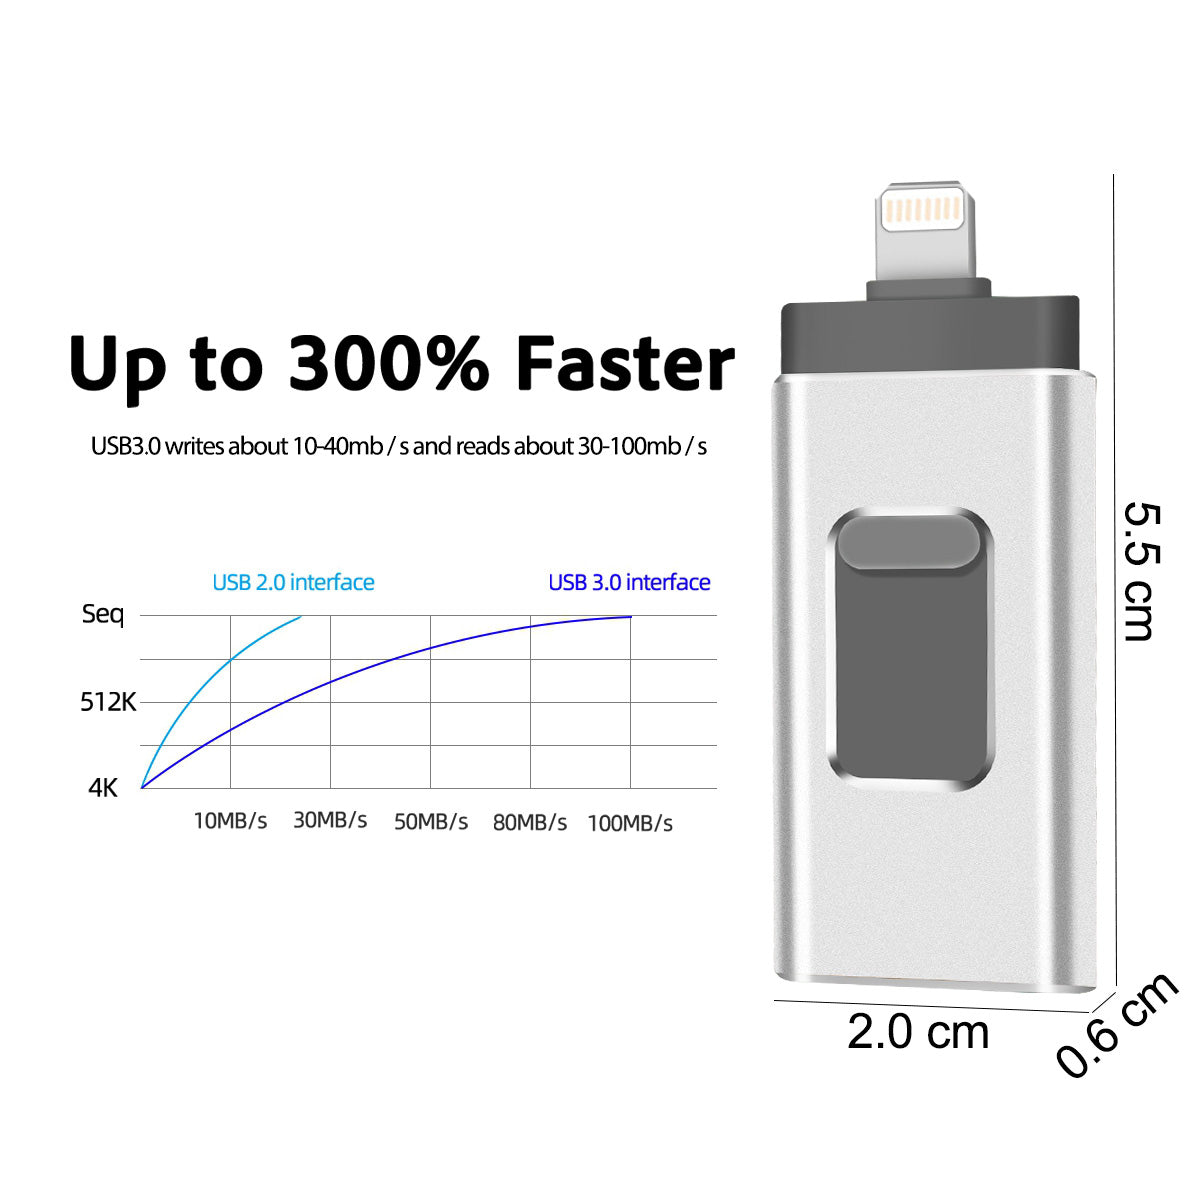 Uniqkart R-01B 32GB USB Memory Stick for iPhone Android PC, Portable USB 3.0 Flash Drive Thumb Drive Photo Stick - Silver